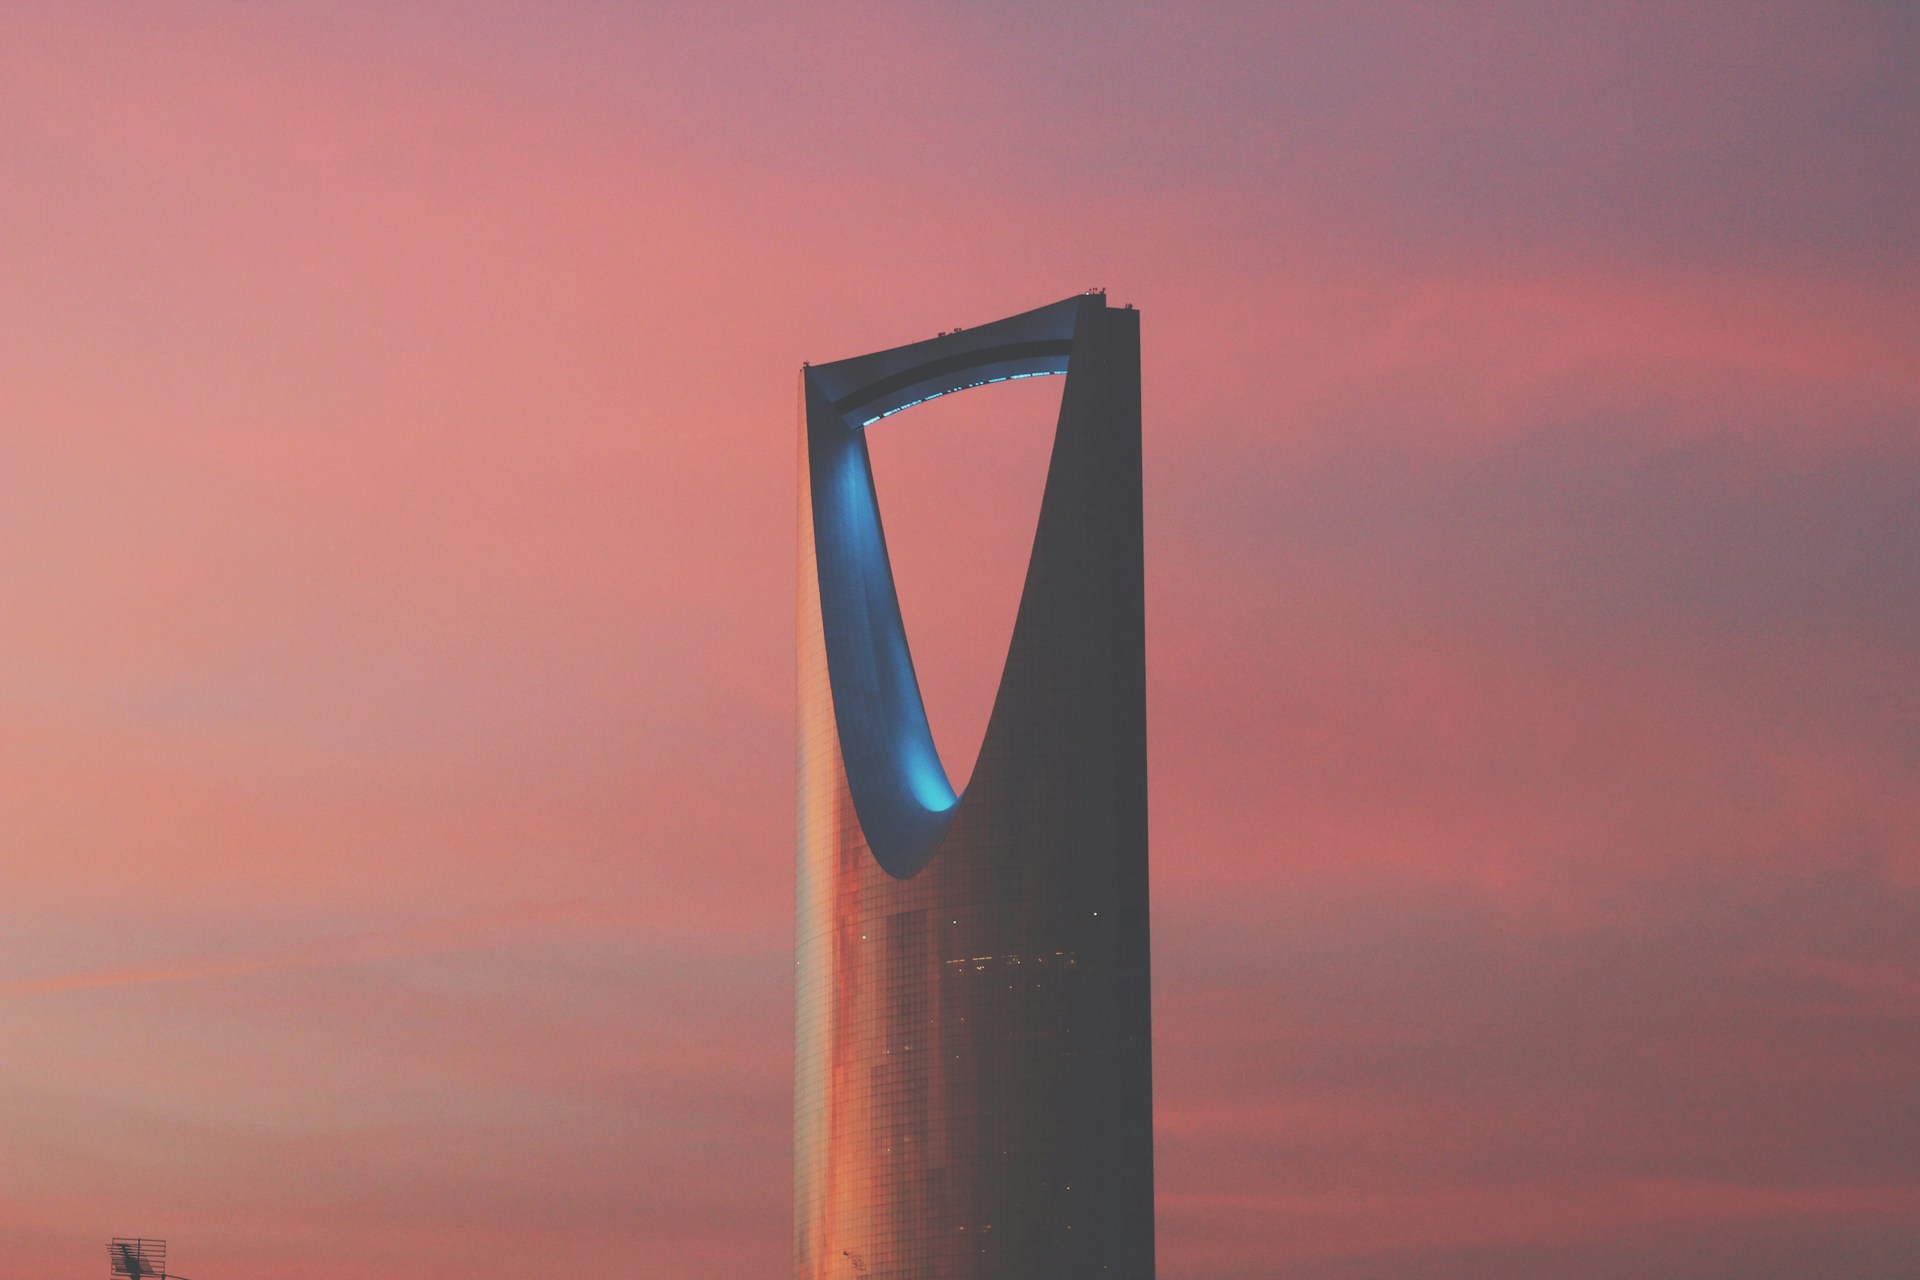 The Kingdom Centre in Riyadh, a modern symbol of doing business in Saudi Arabia